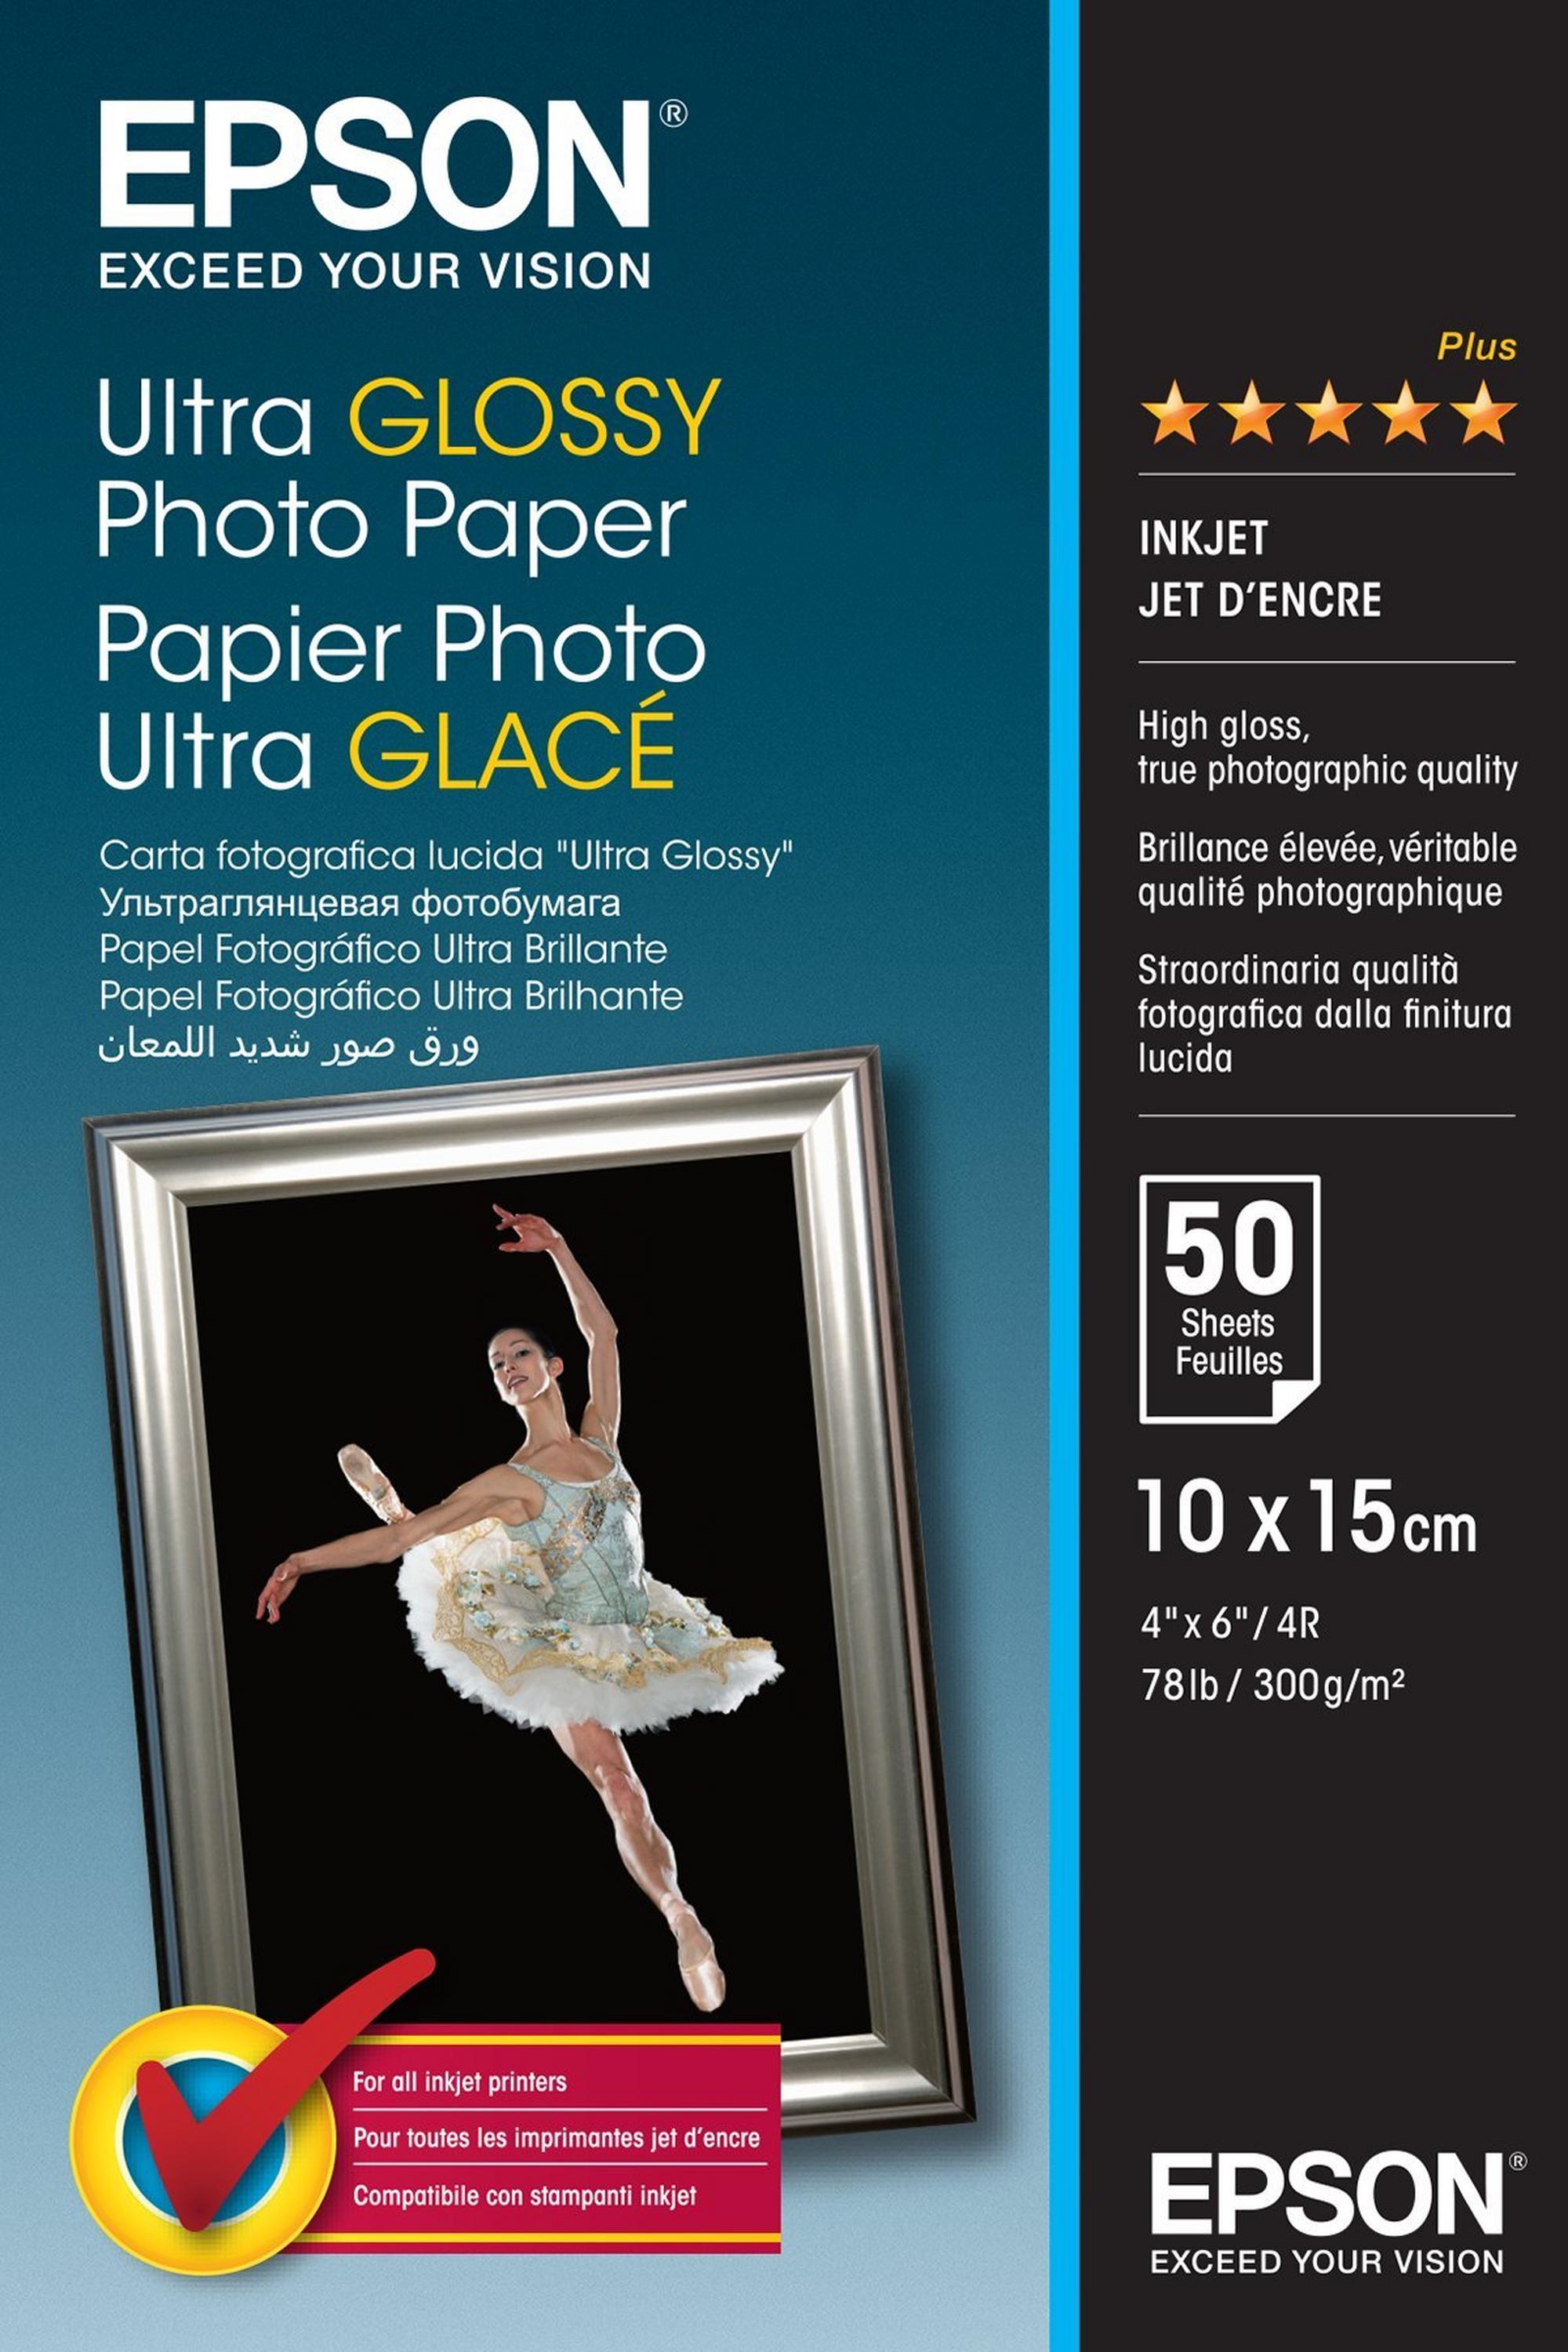 Epson Ultra Glossy Photo Paper - 10x15cm, 300g/m² - 50 Sheets